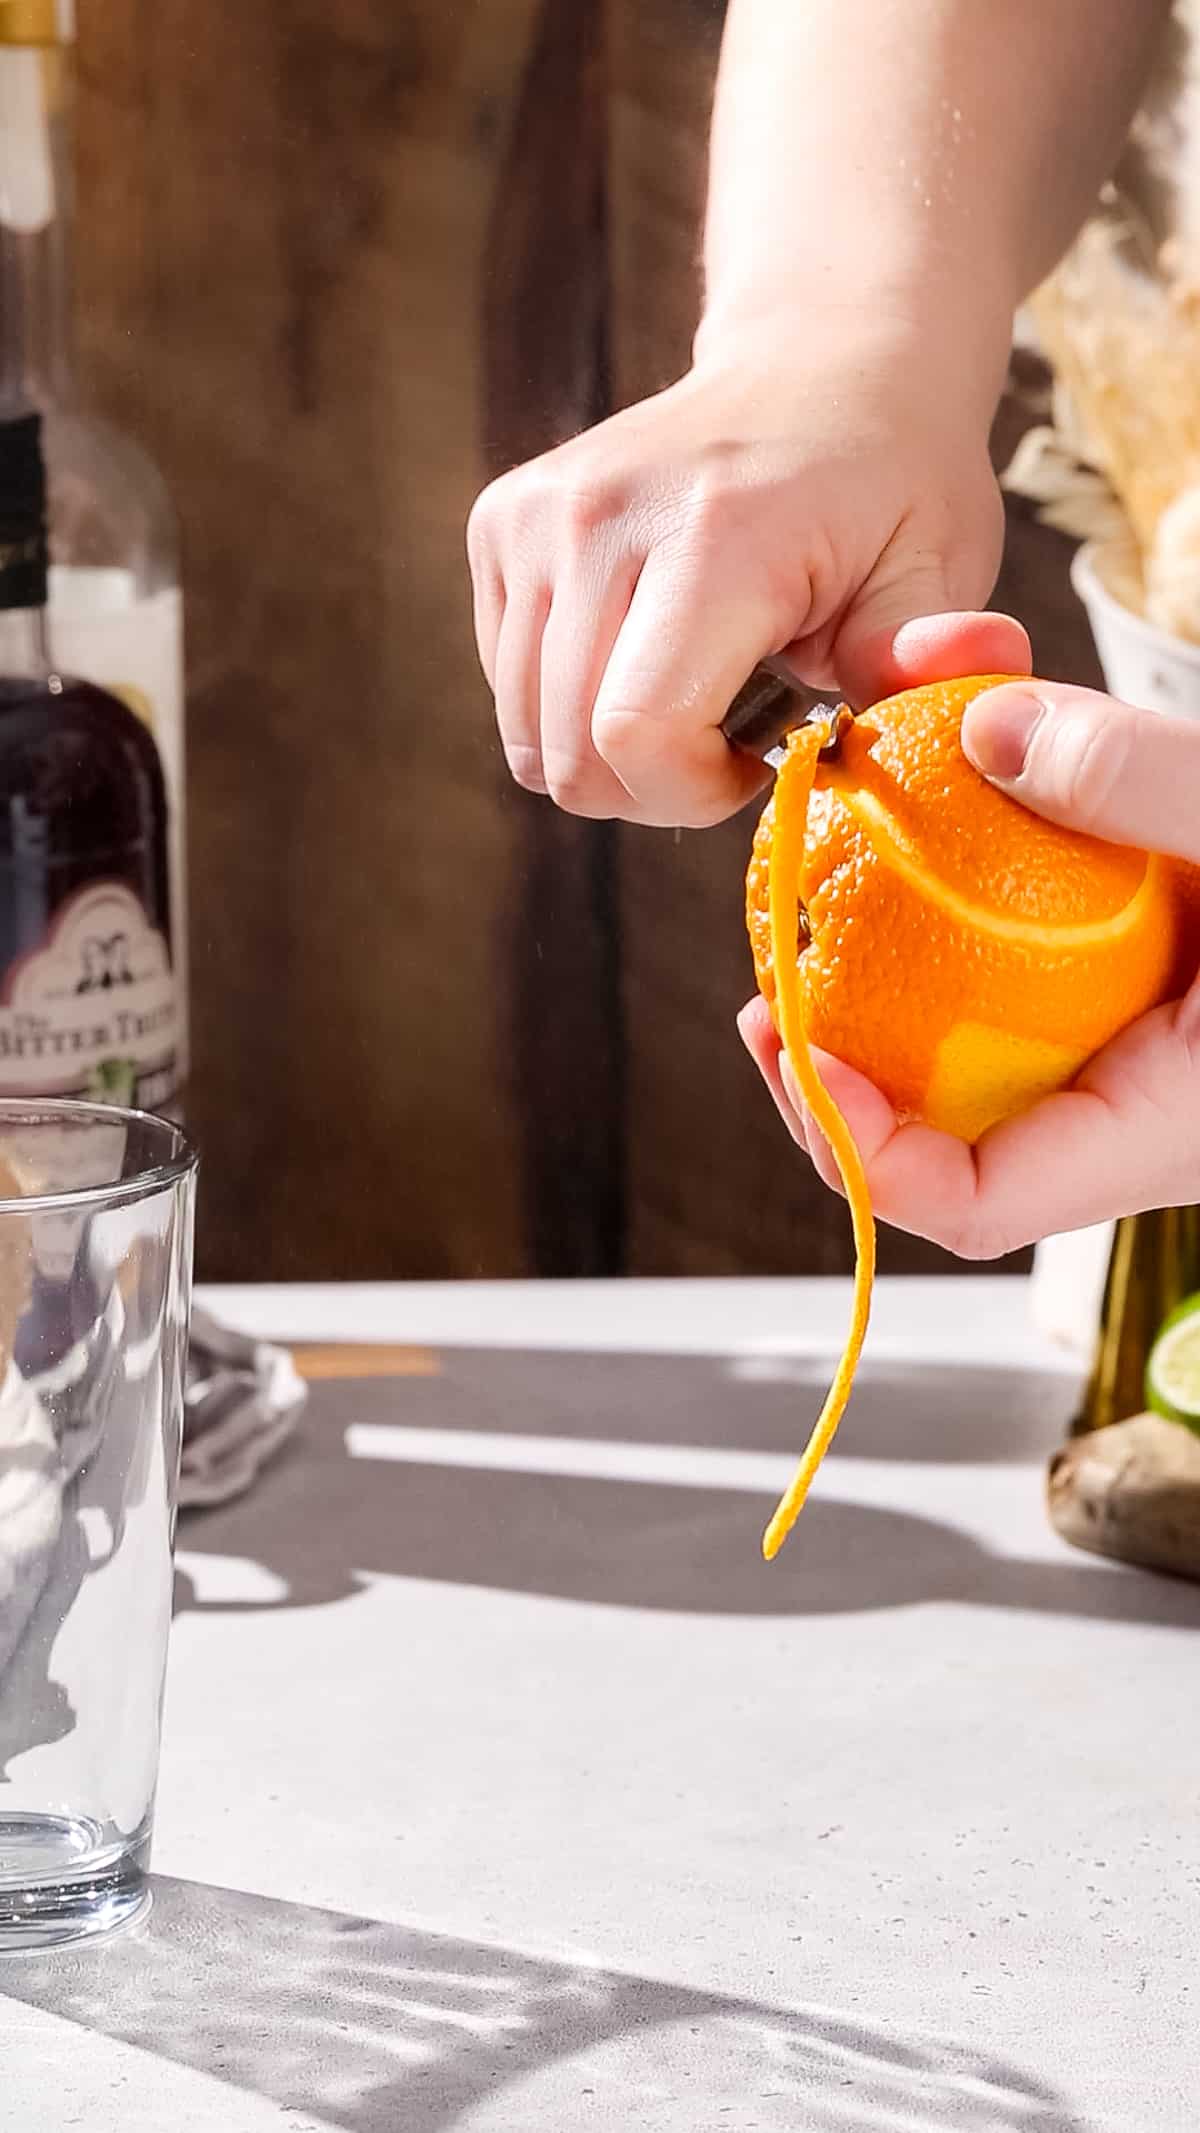 Hands using a channel knife to cut a long strip of orange peel.